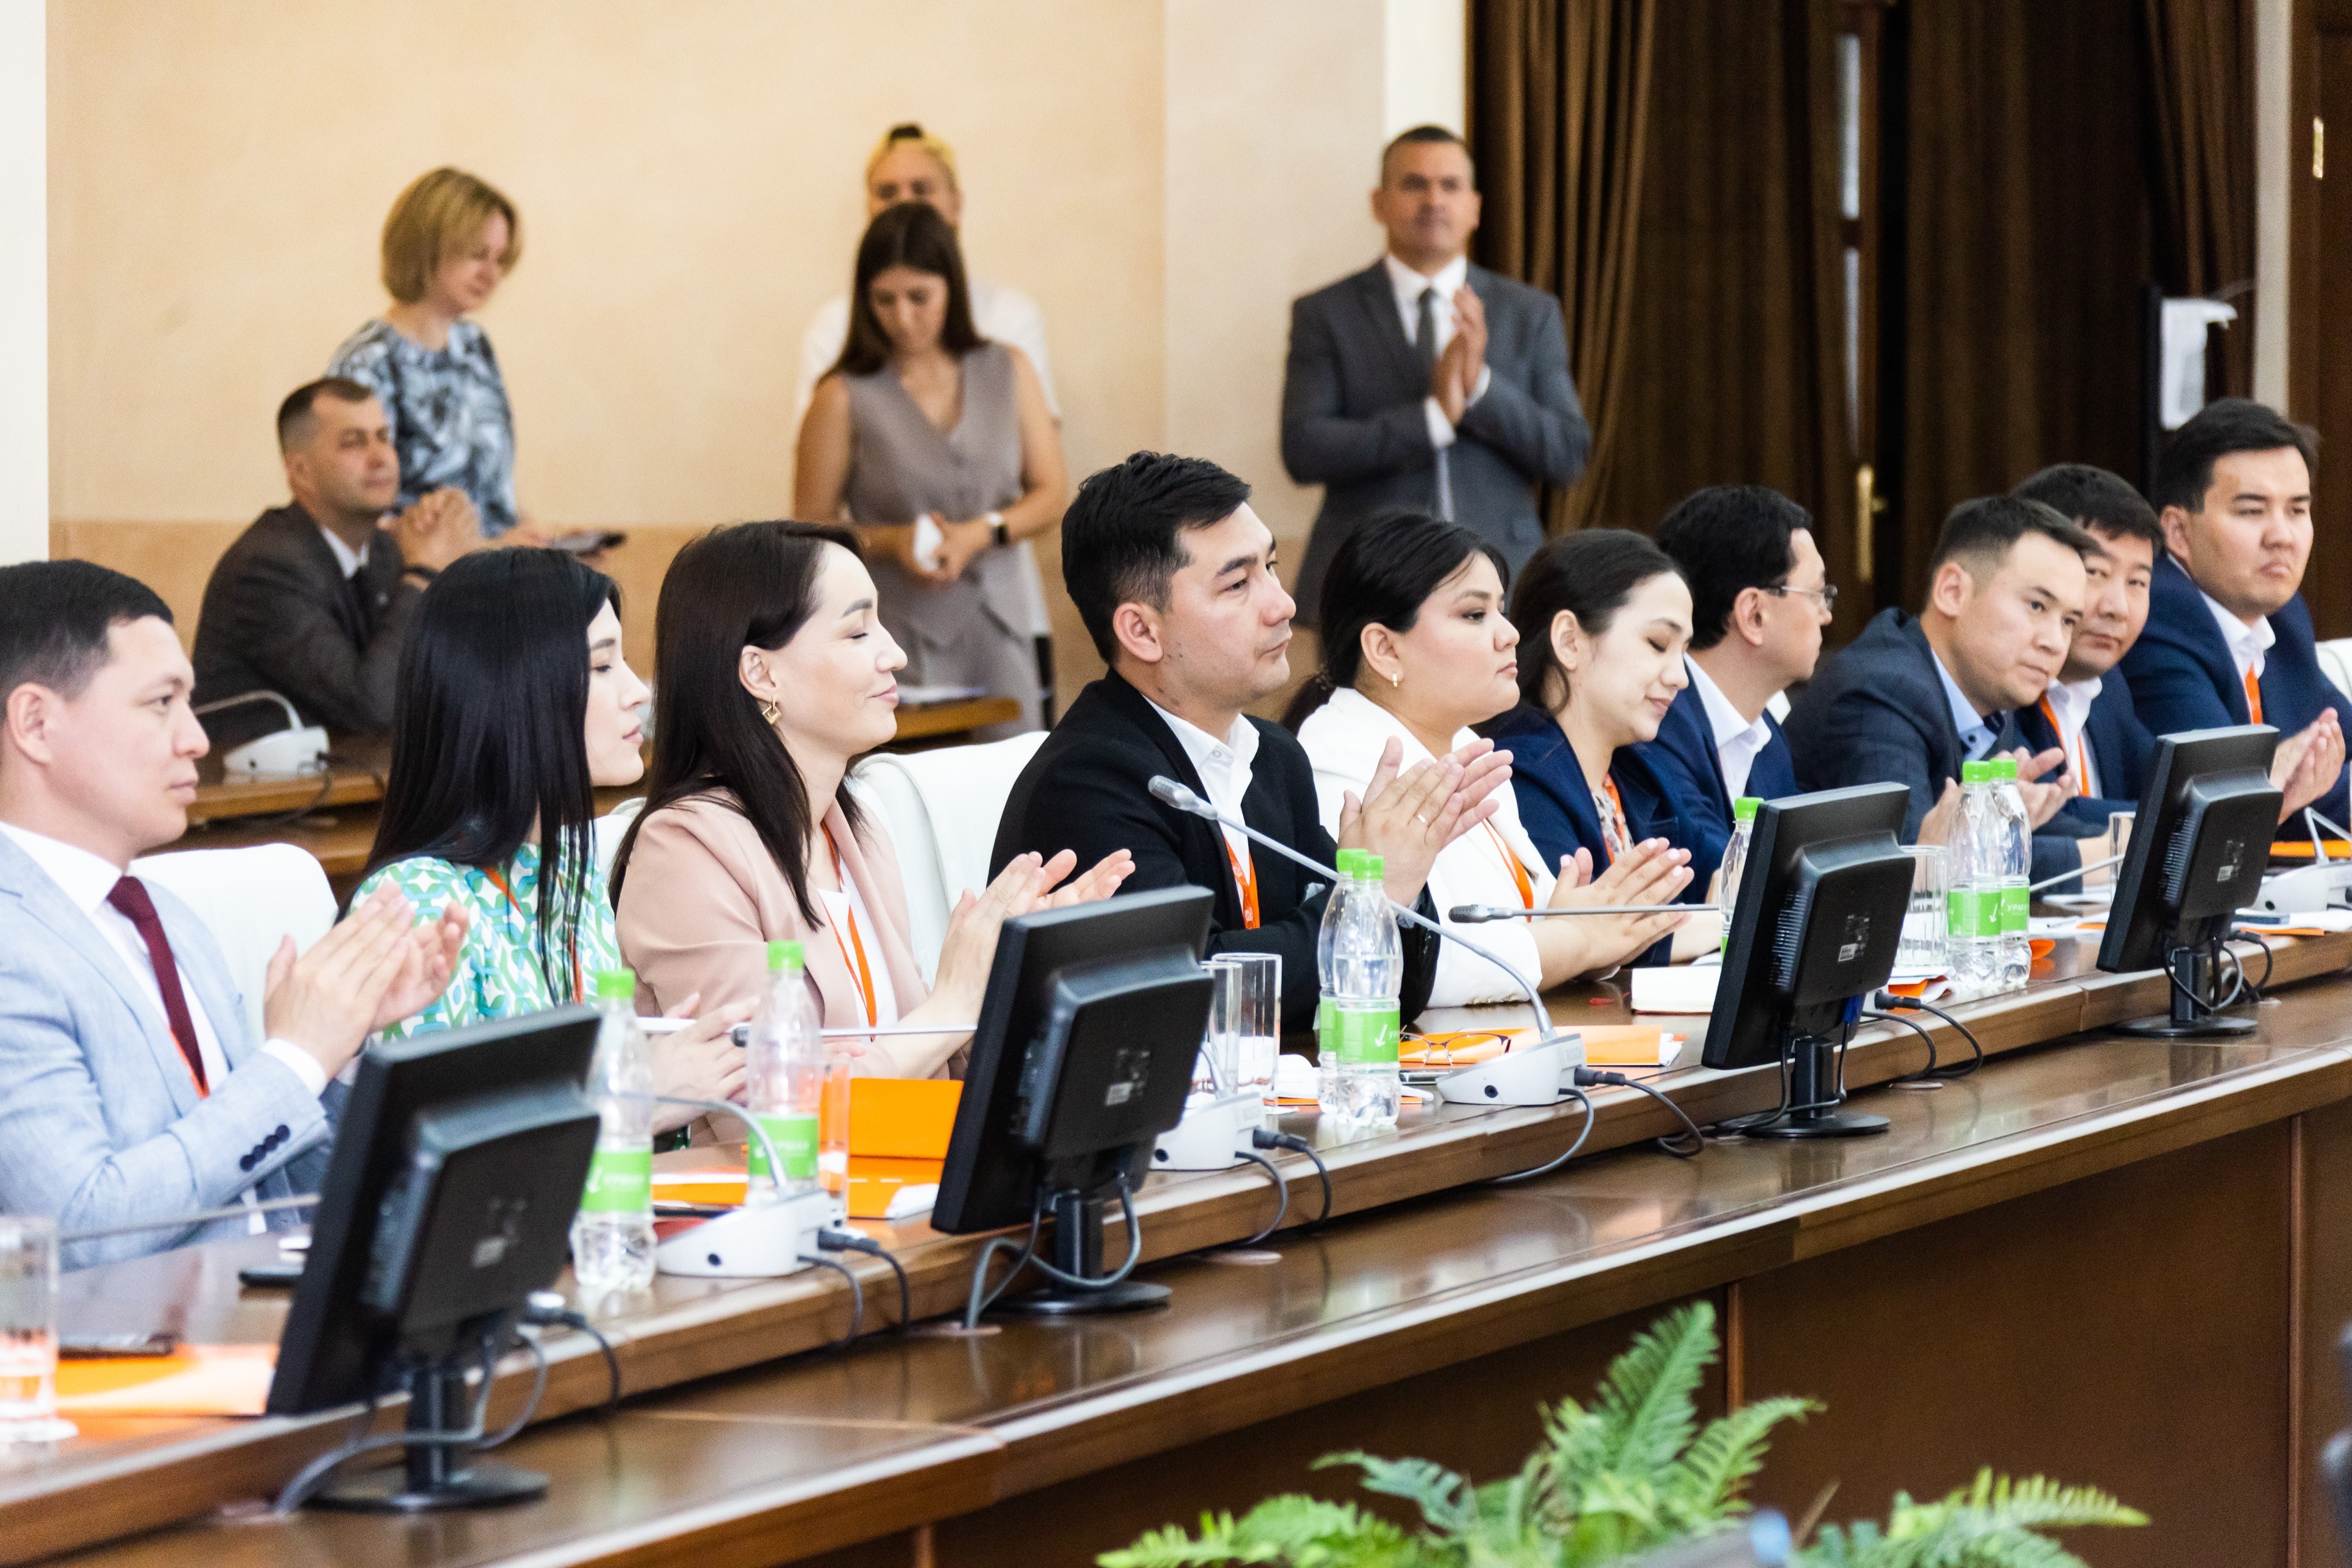 Kazakhstan's public servants participate in the internship's prepared by HSPA ,-